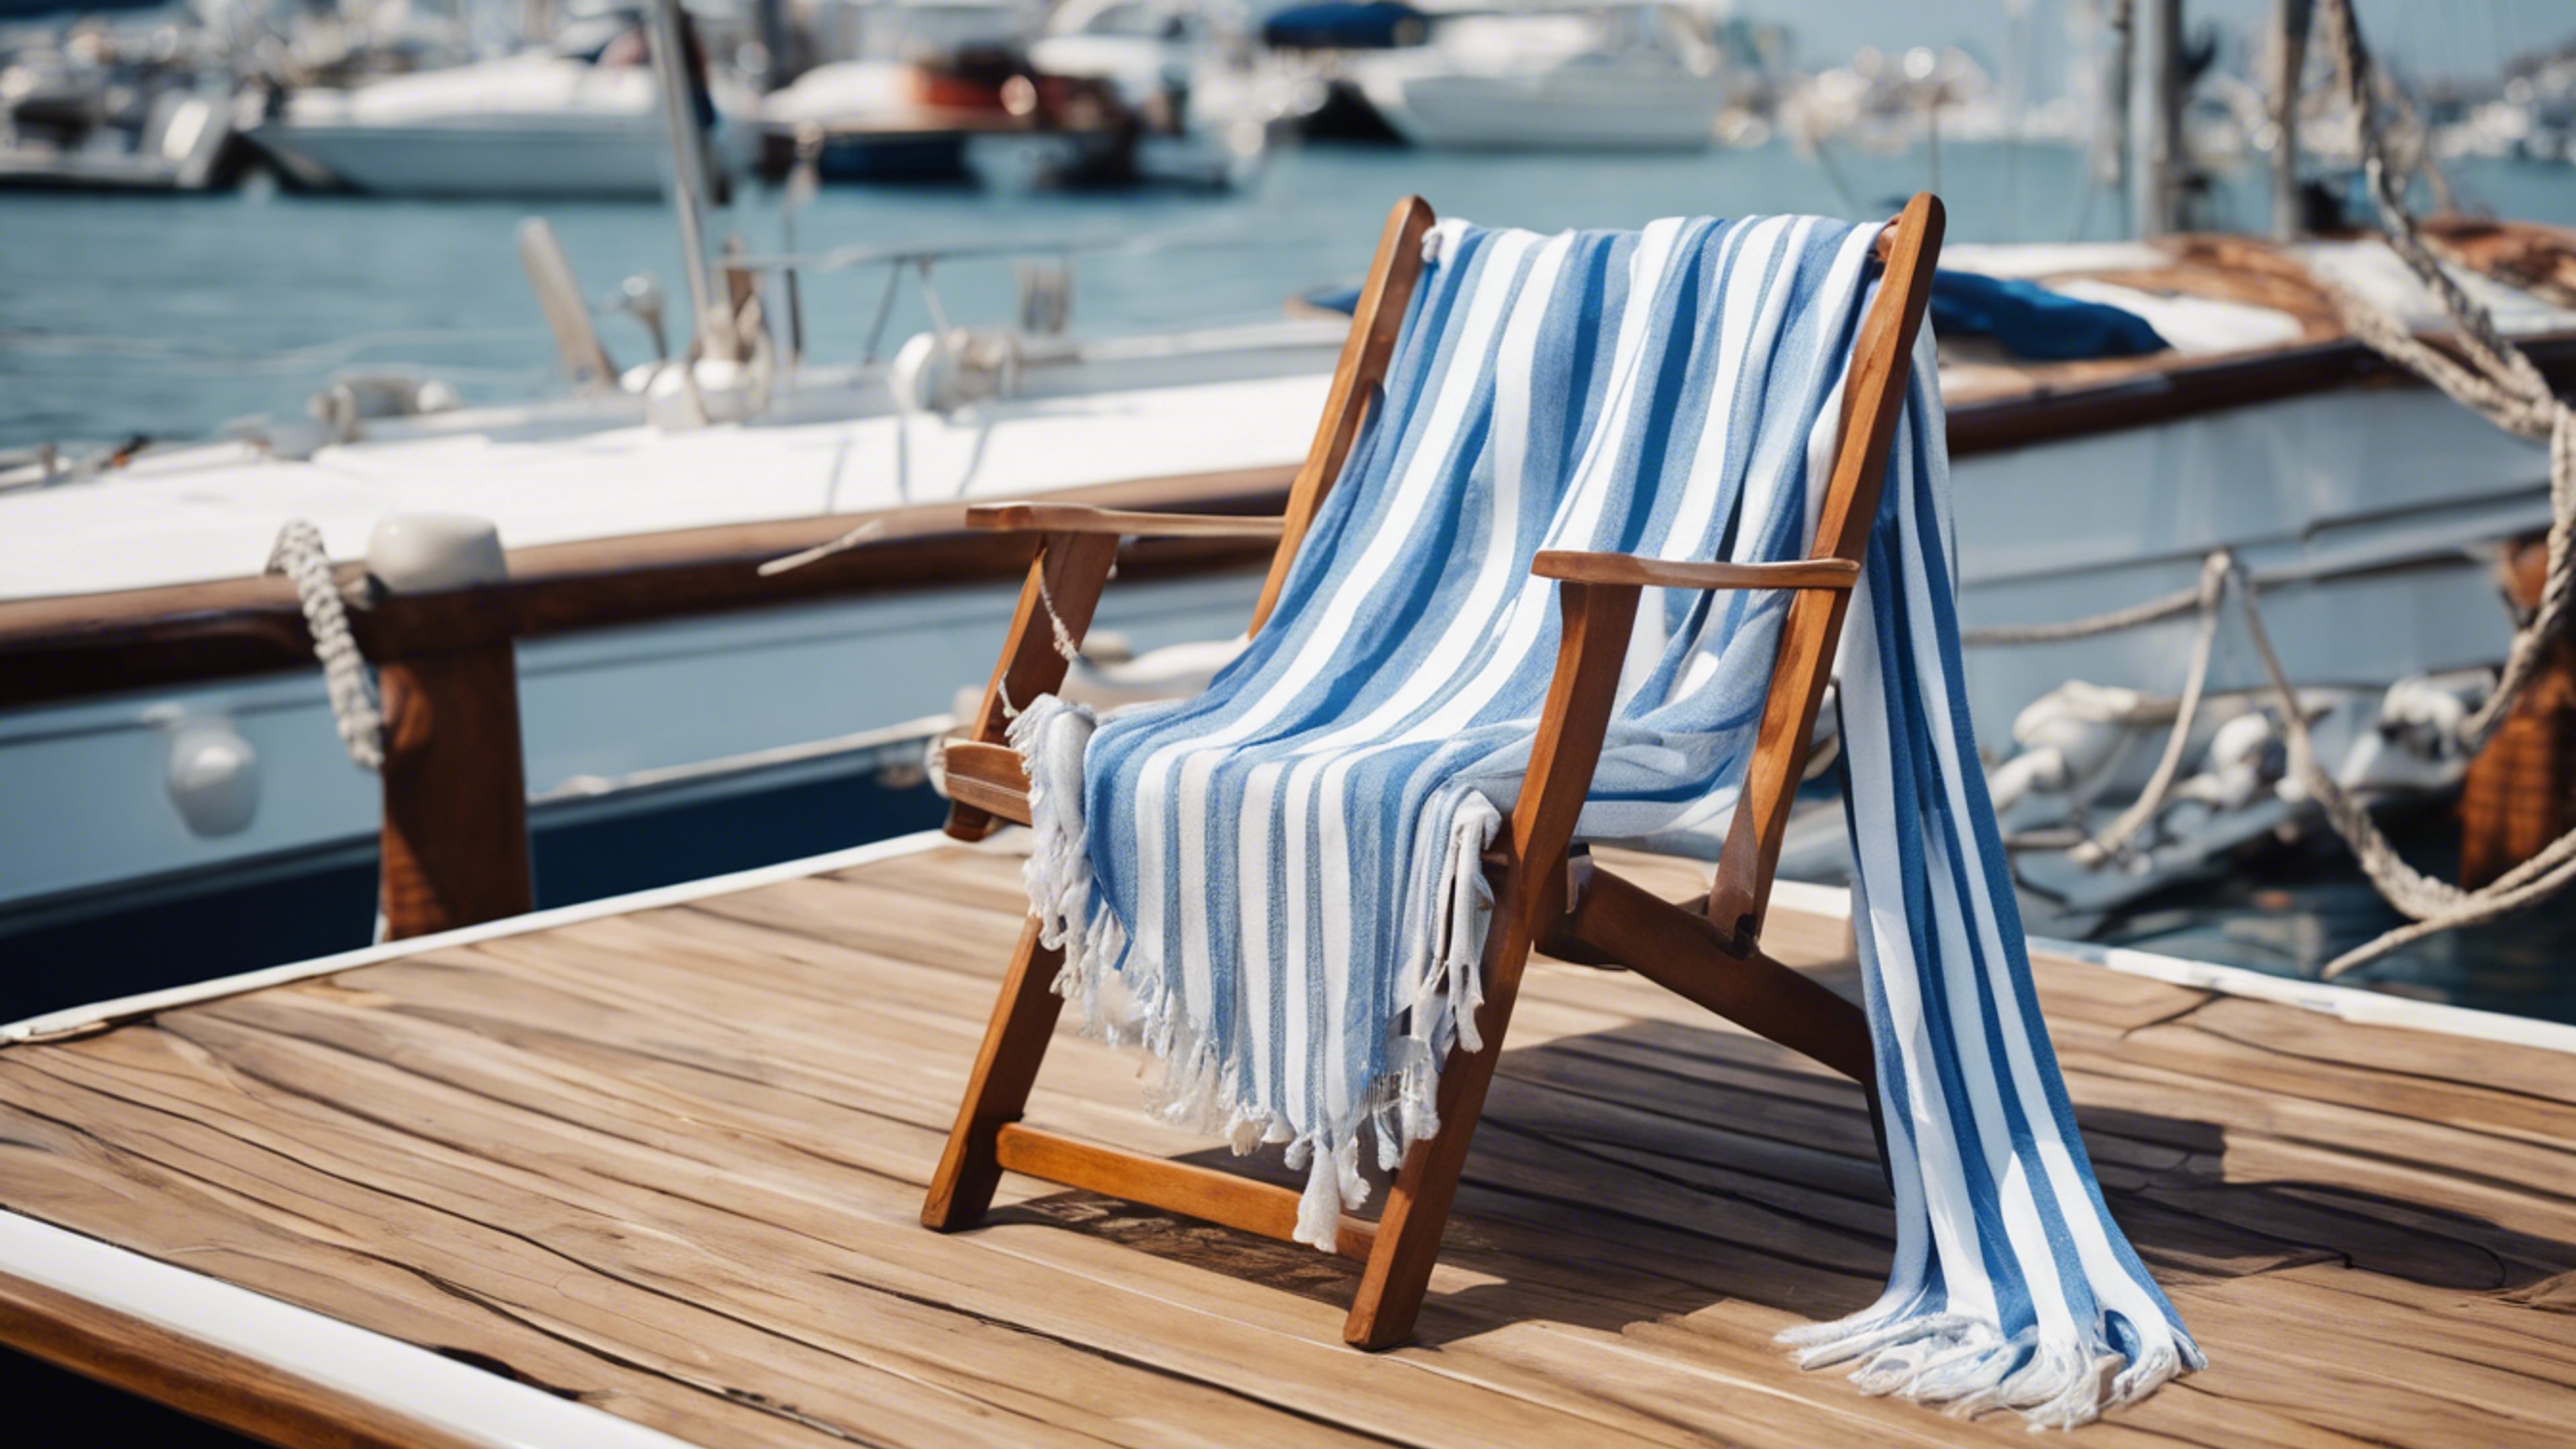 Preppy blue and white striped shawl draped over a teak deck chair on a sailboat. Tapetai[8e59a438a9aa4e06a25d]